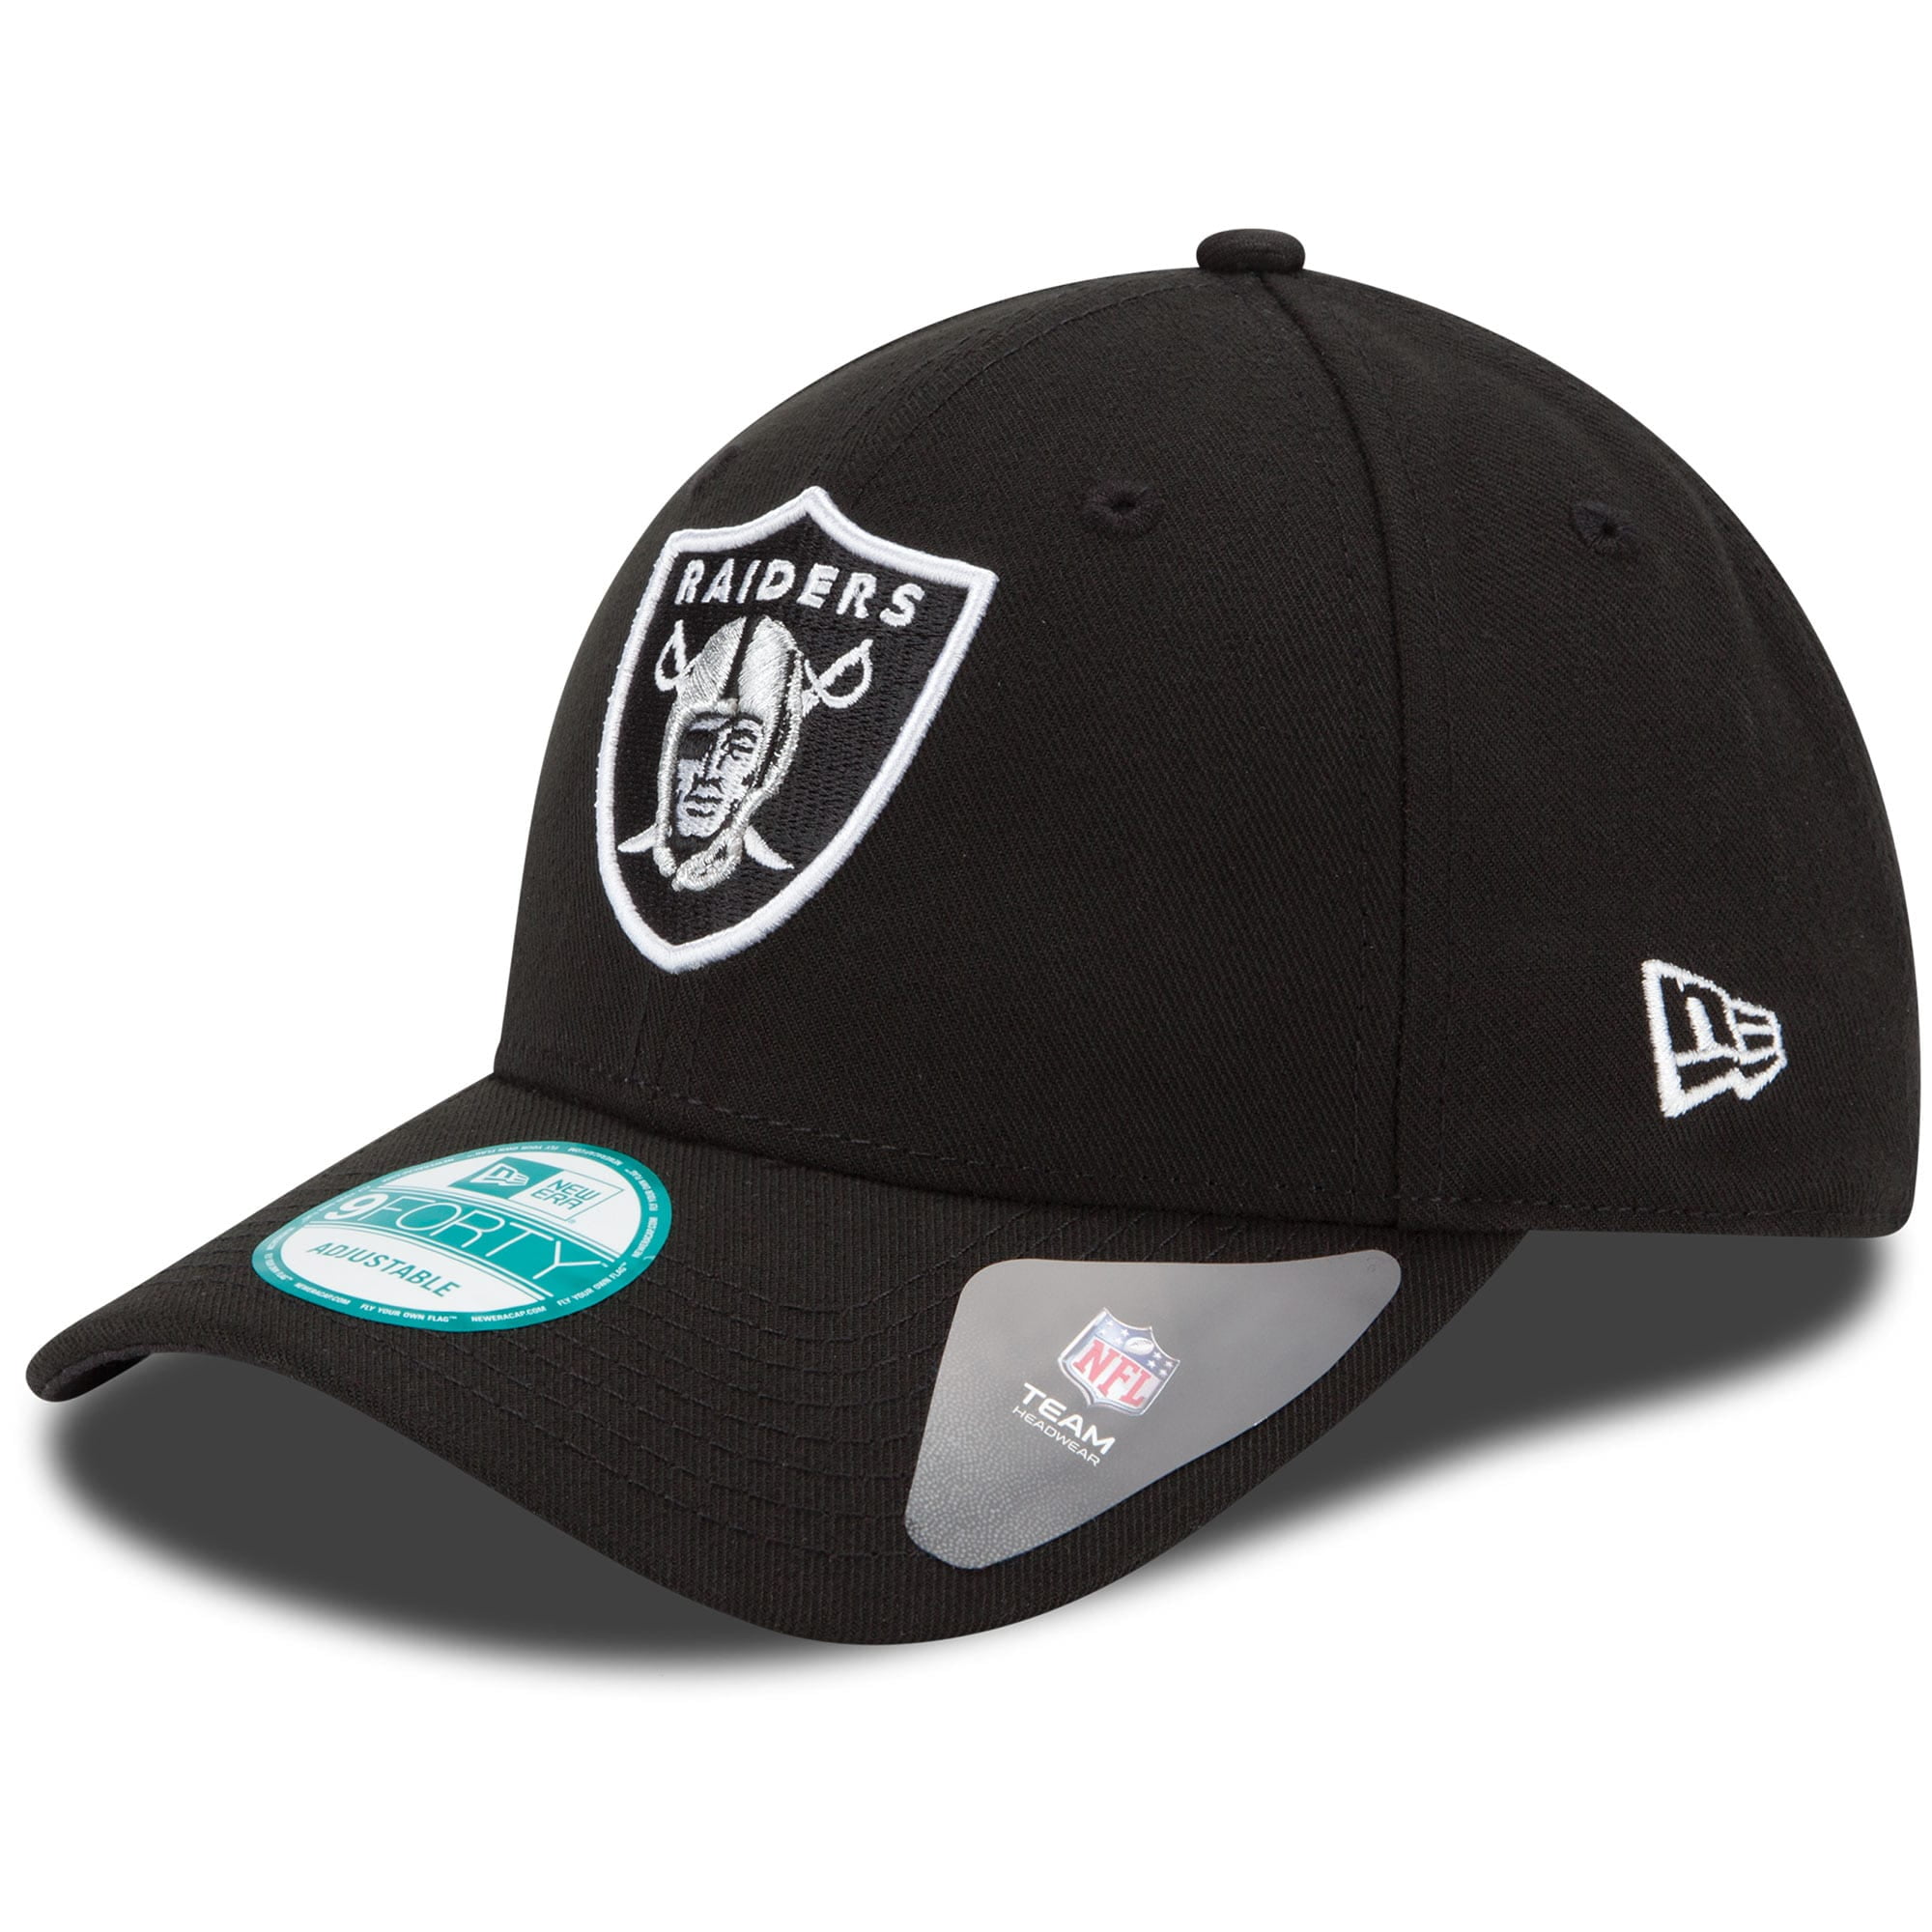 Black New Era Oakland Raiders 9forty Adjustable Cap League Essential 